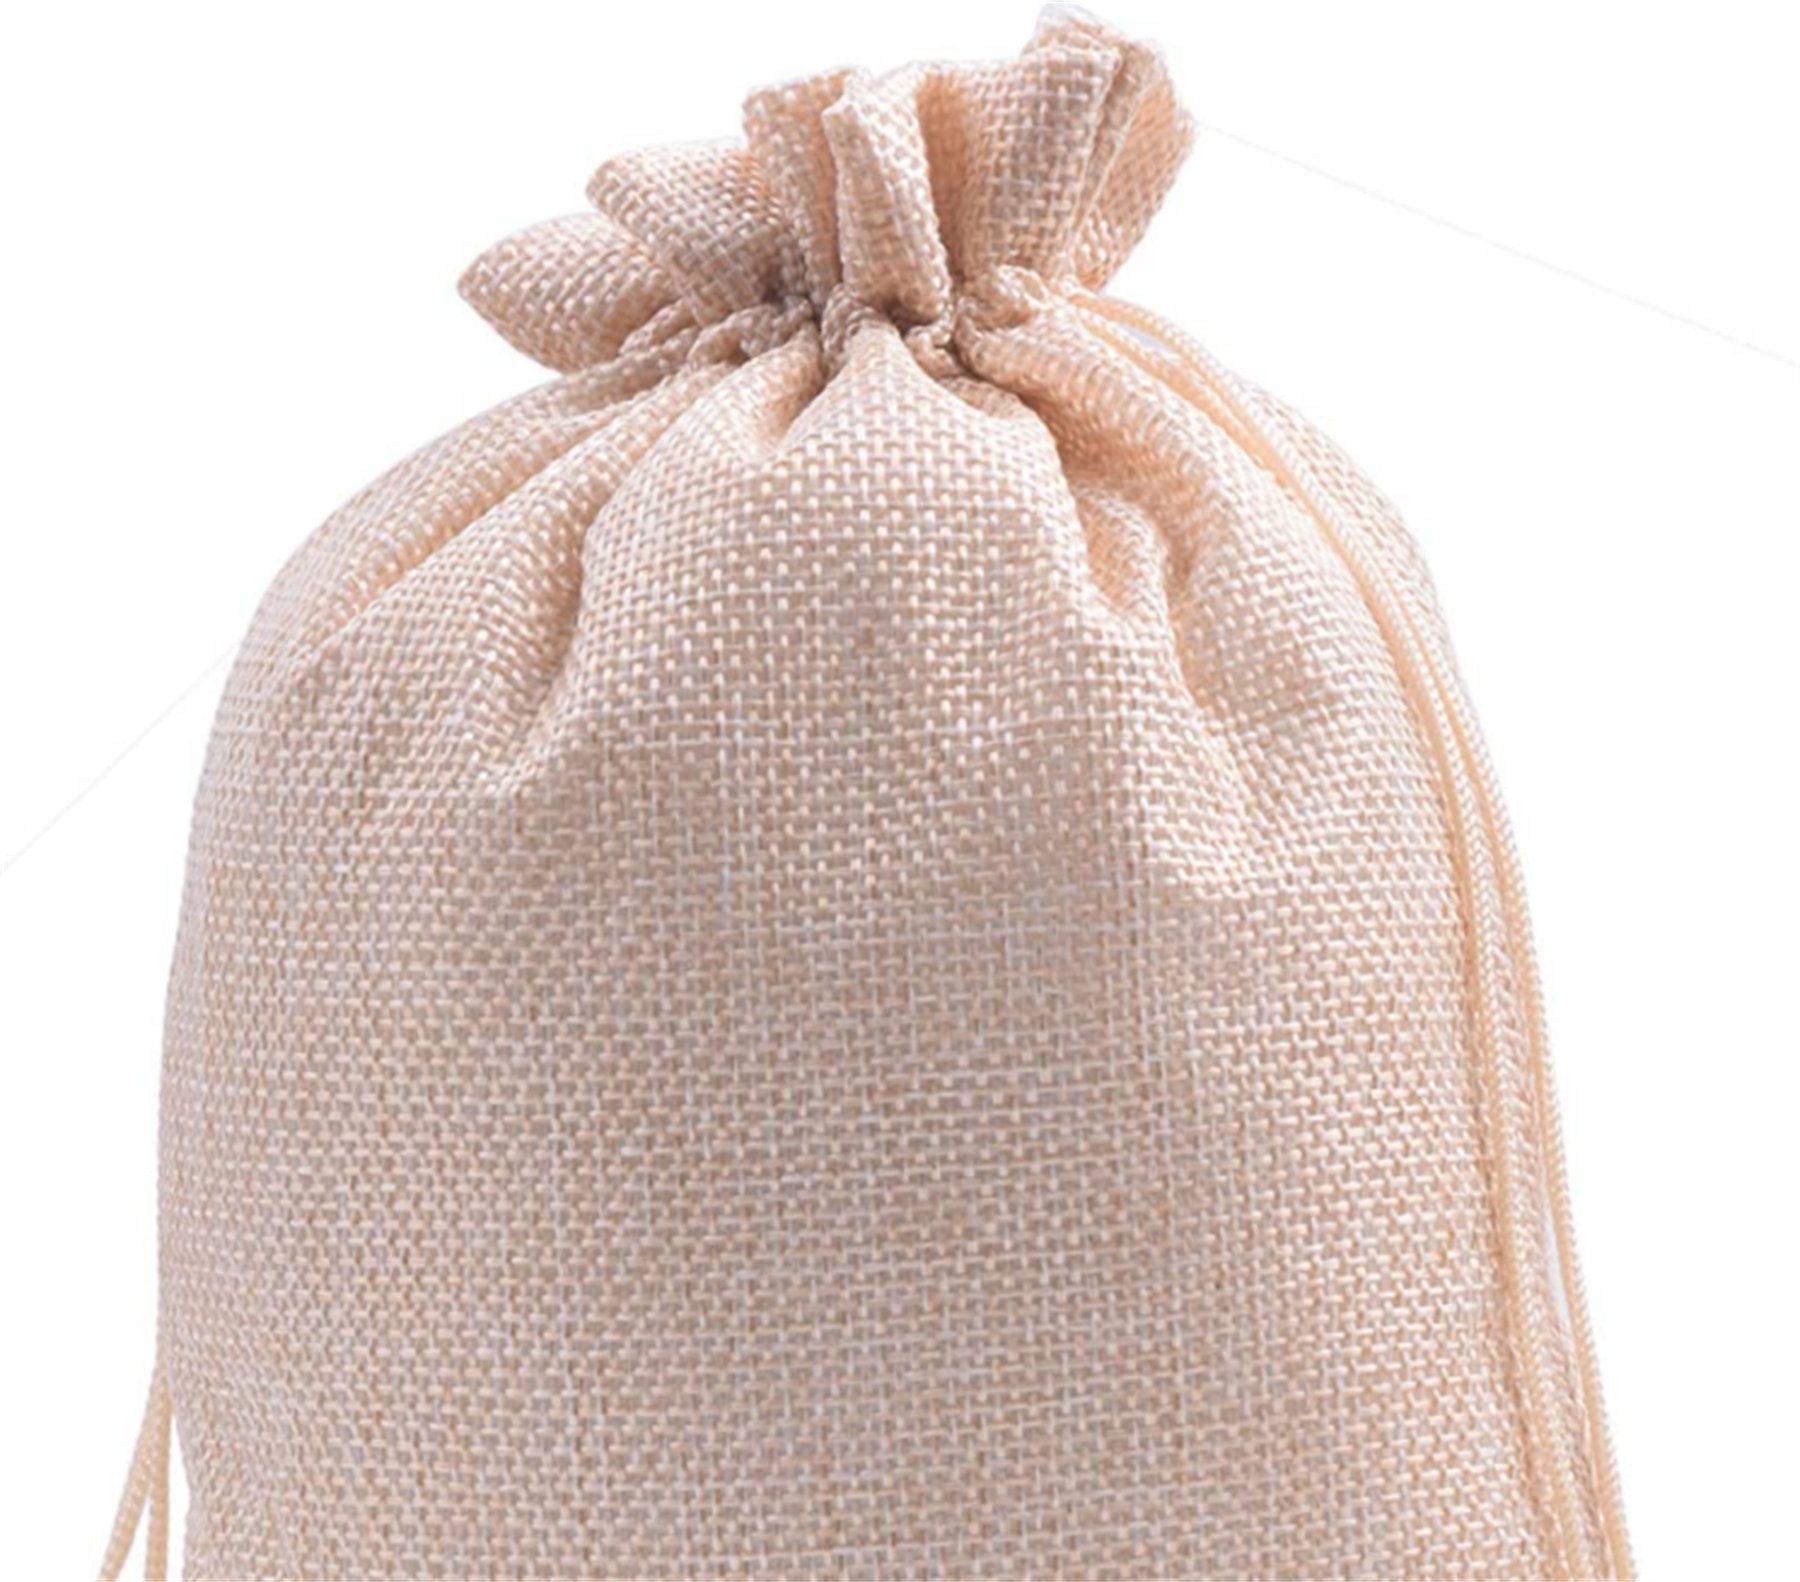 10Pcs Jewelry Pouches Gift Bags Reusable Drawstring Cotton Bag Set Wedding Favor 